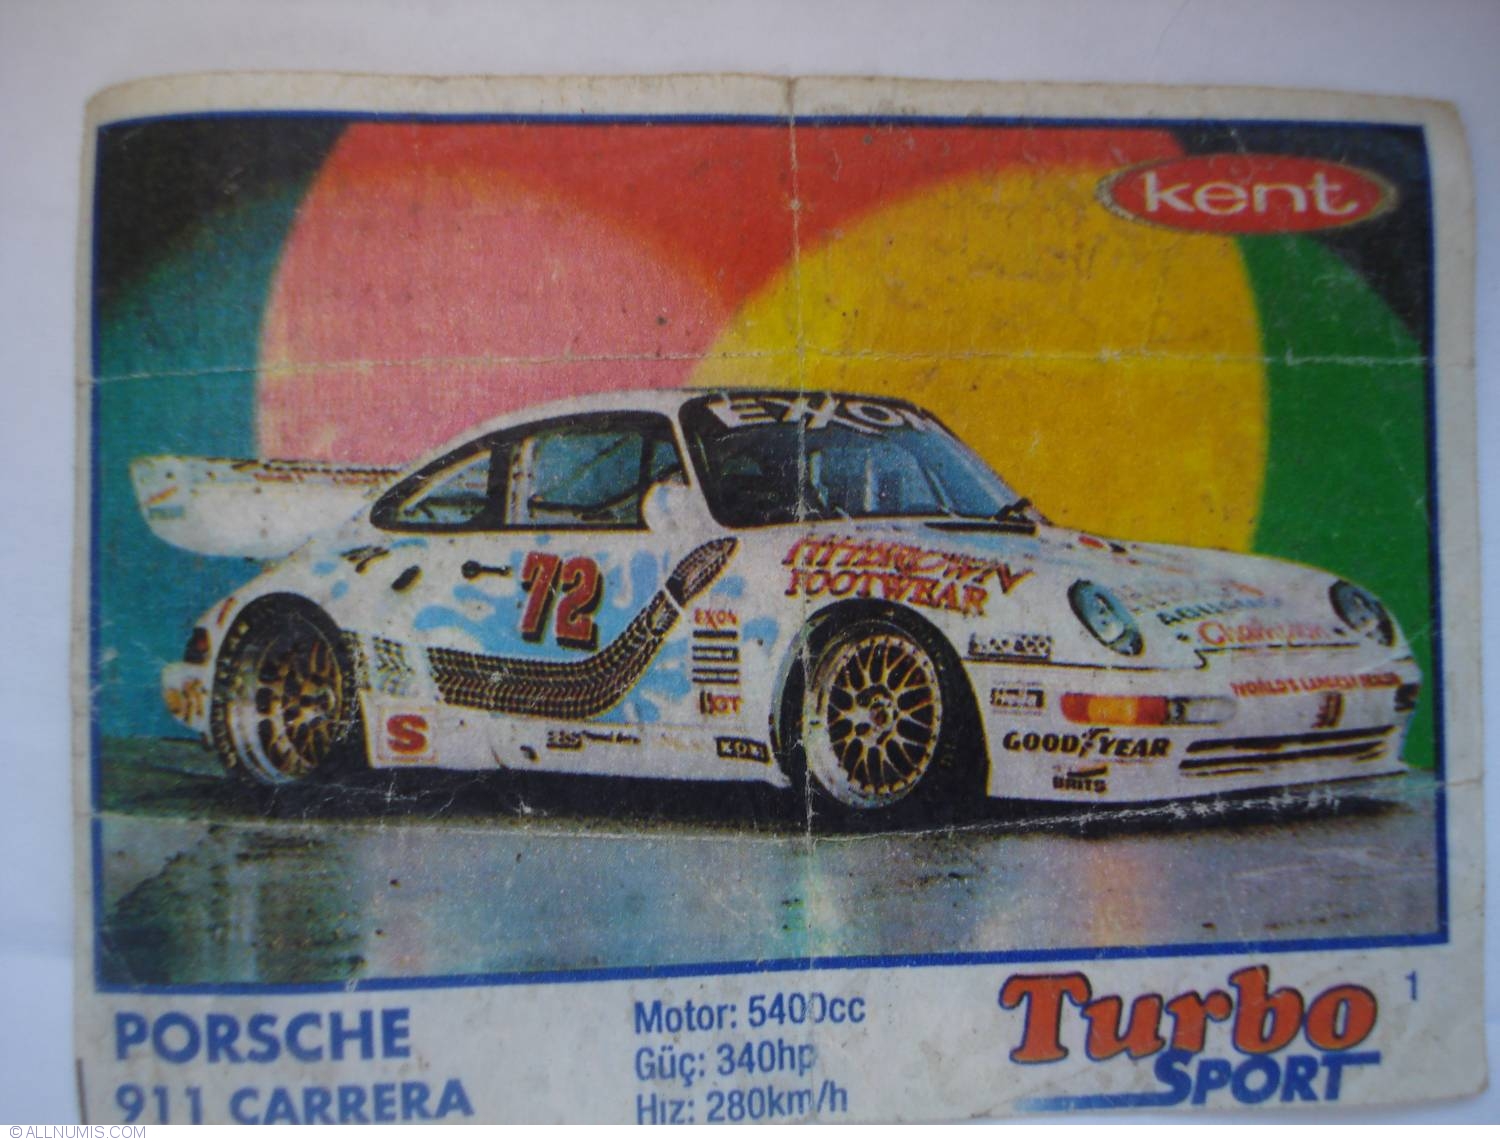 1 - Porsche 911 Carrera, Turbo Sports (Kent) 1-70 - Blue frame 